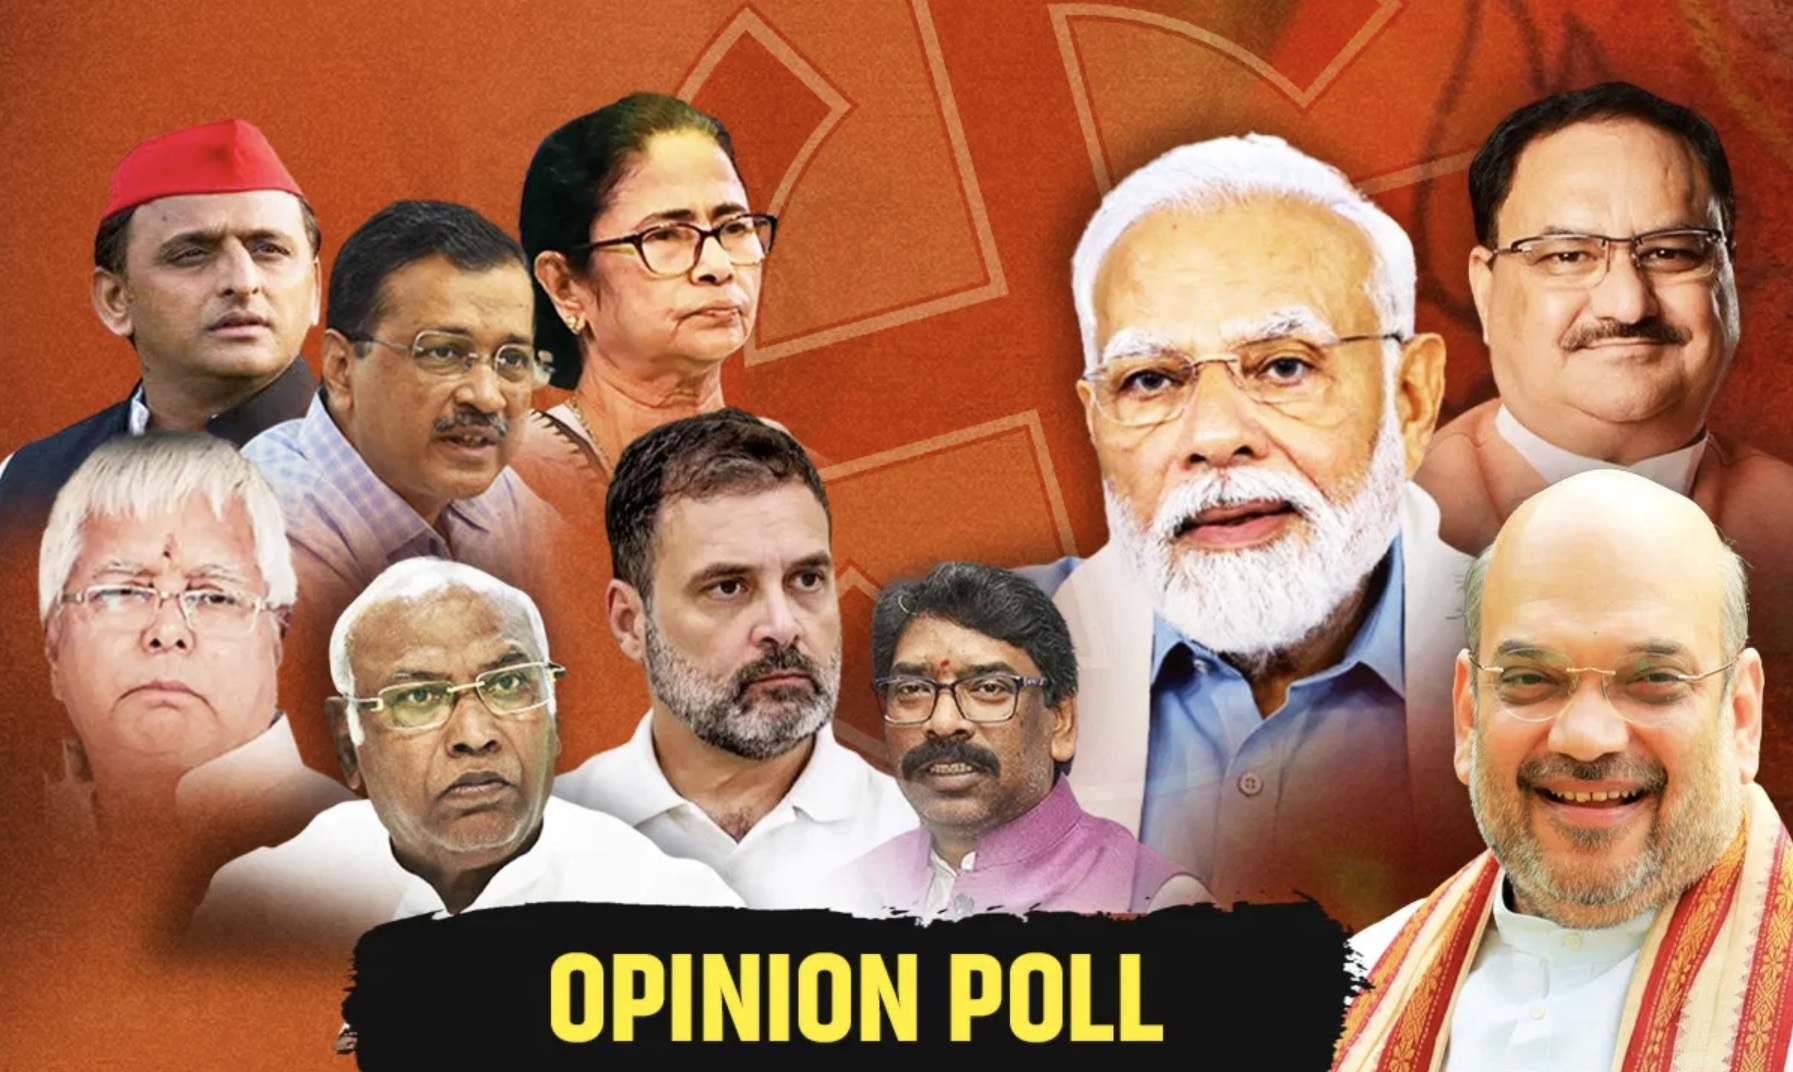 NDA gets 362 seats in T9 India opinion poll